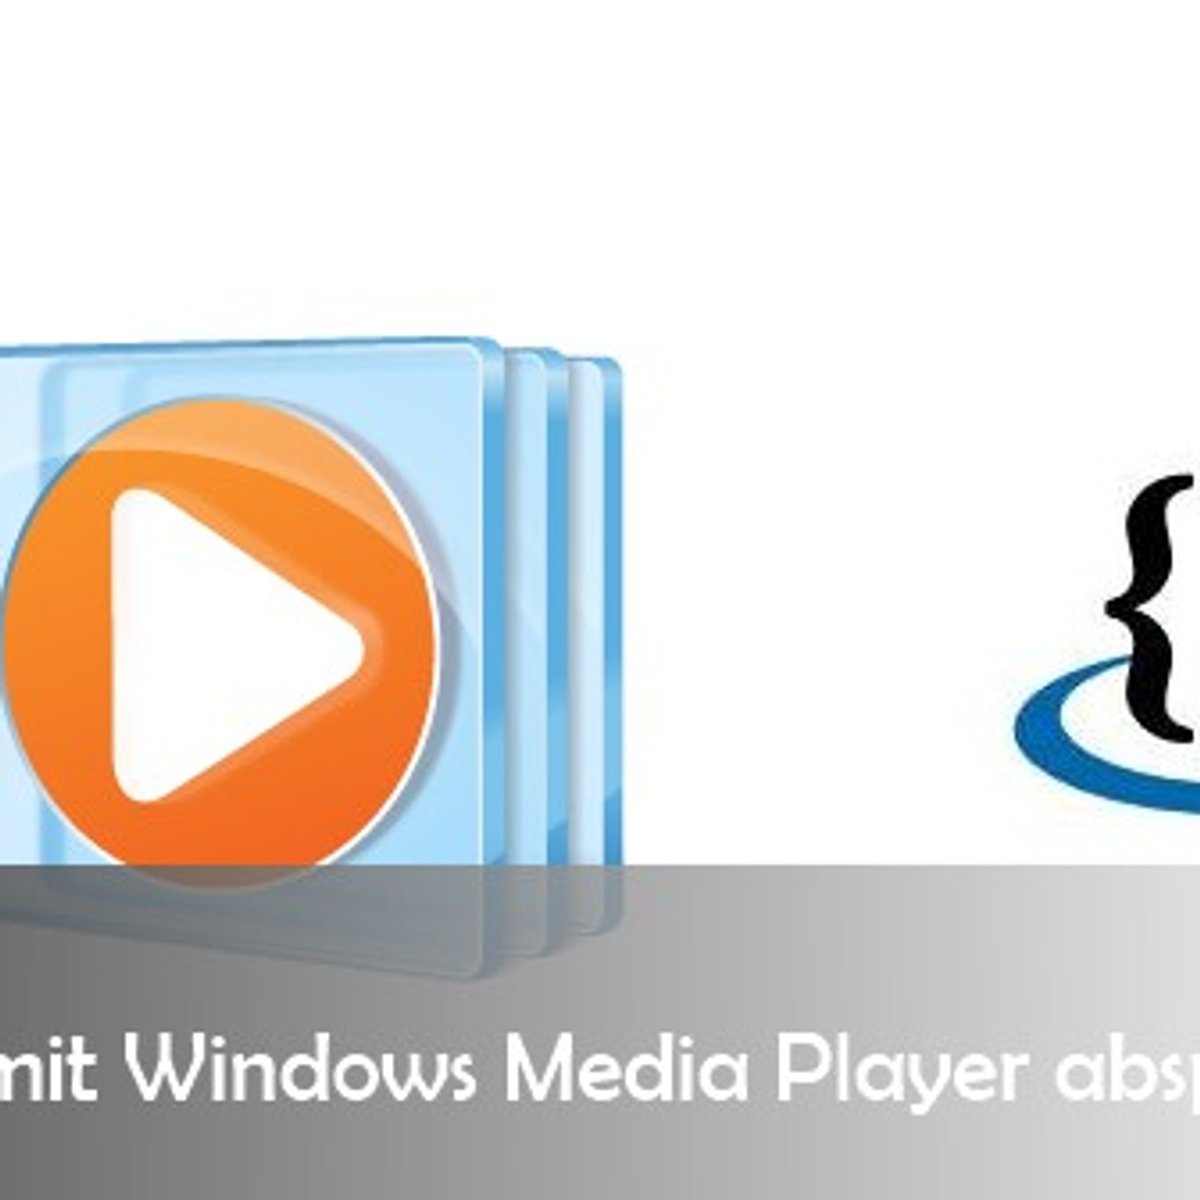 mkv video player for windows 7